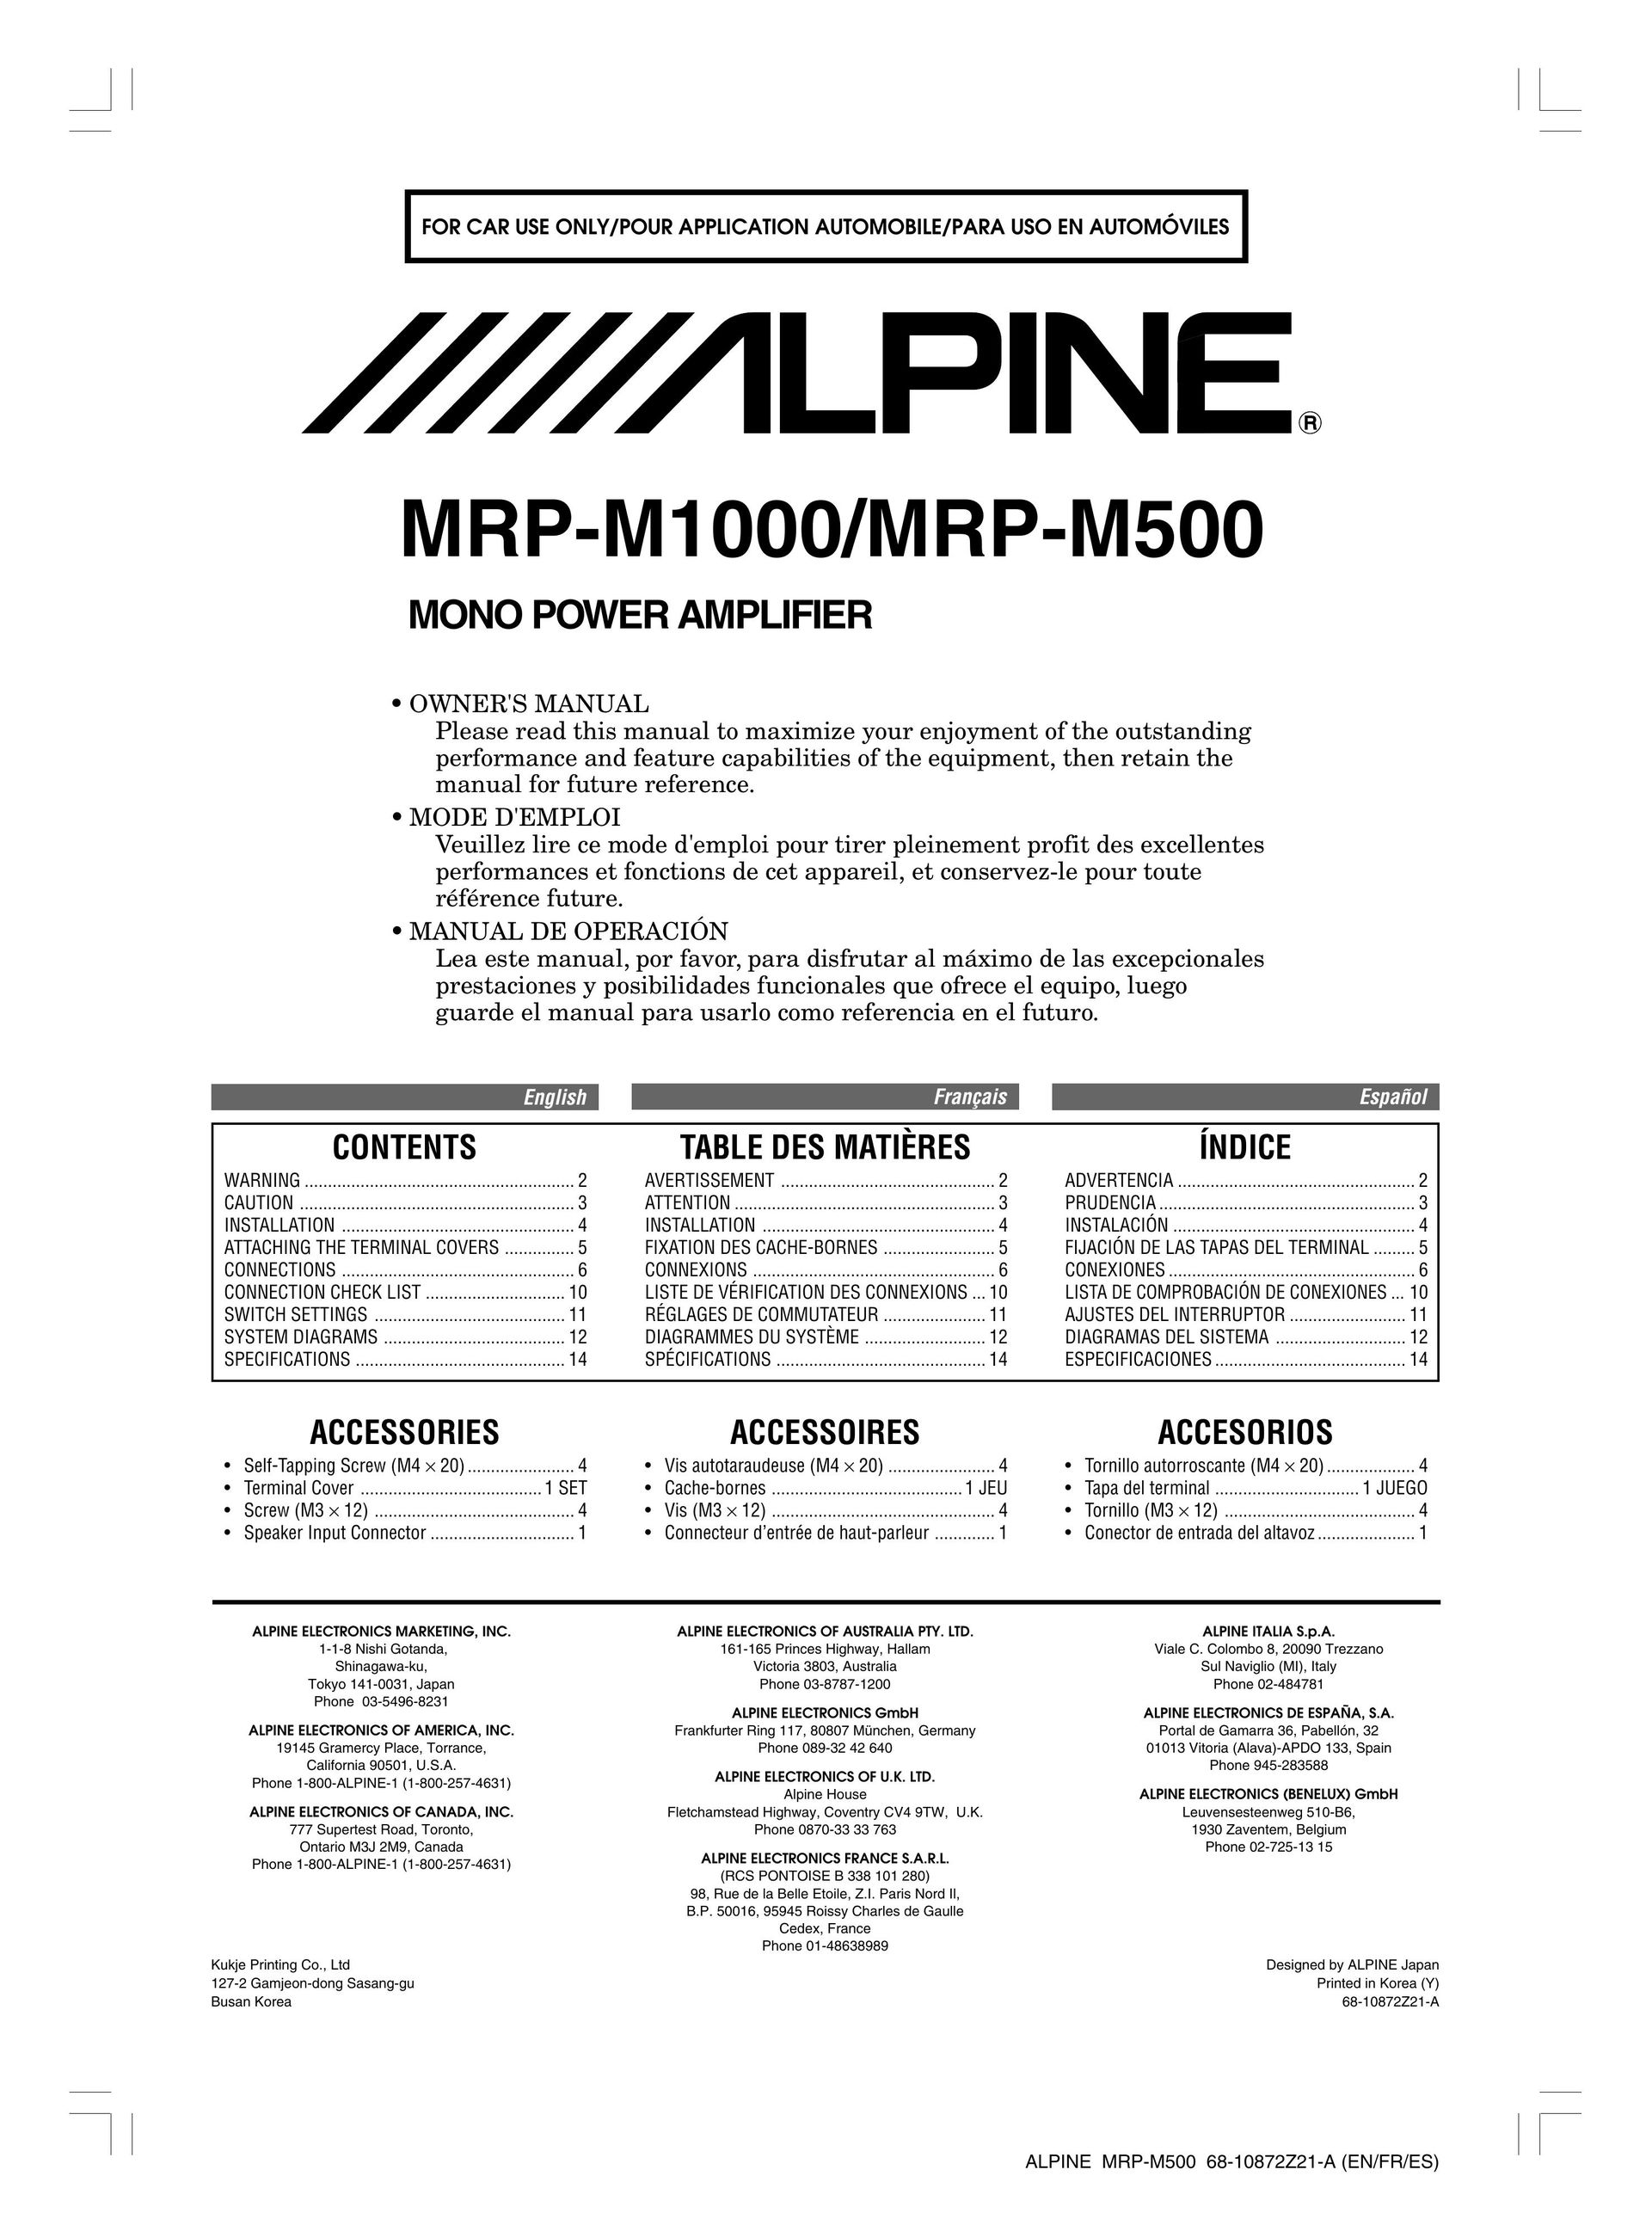 Alpine MRD-M500 Stereo Amplifier User Manual